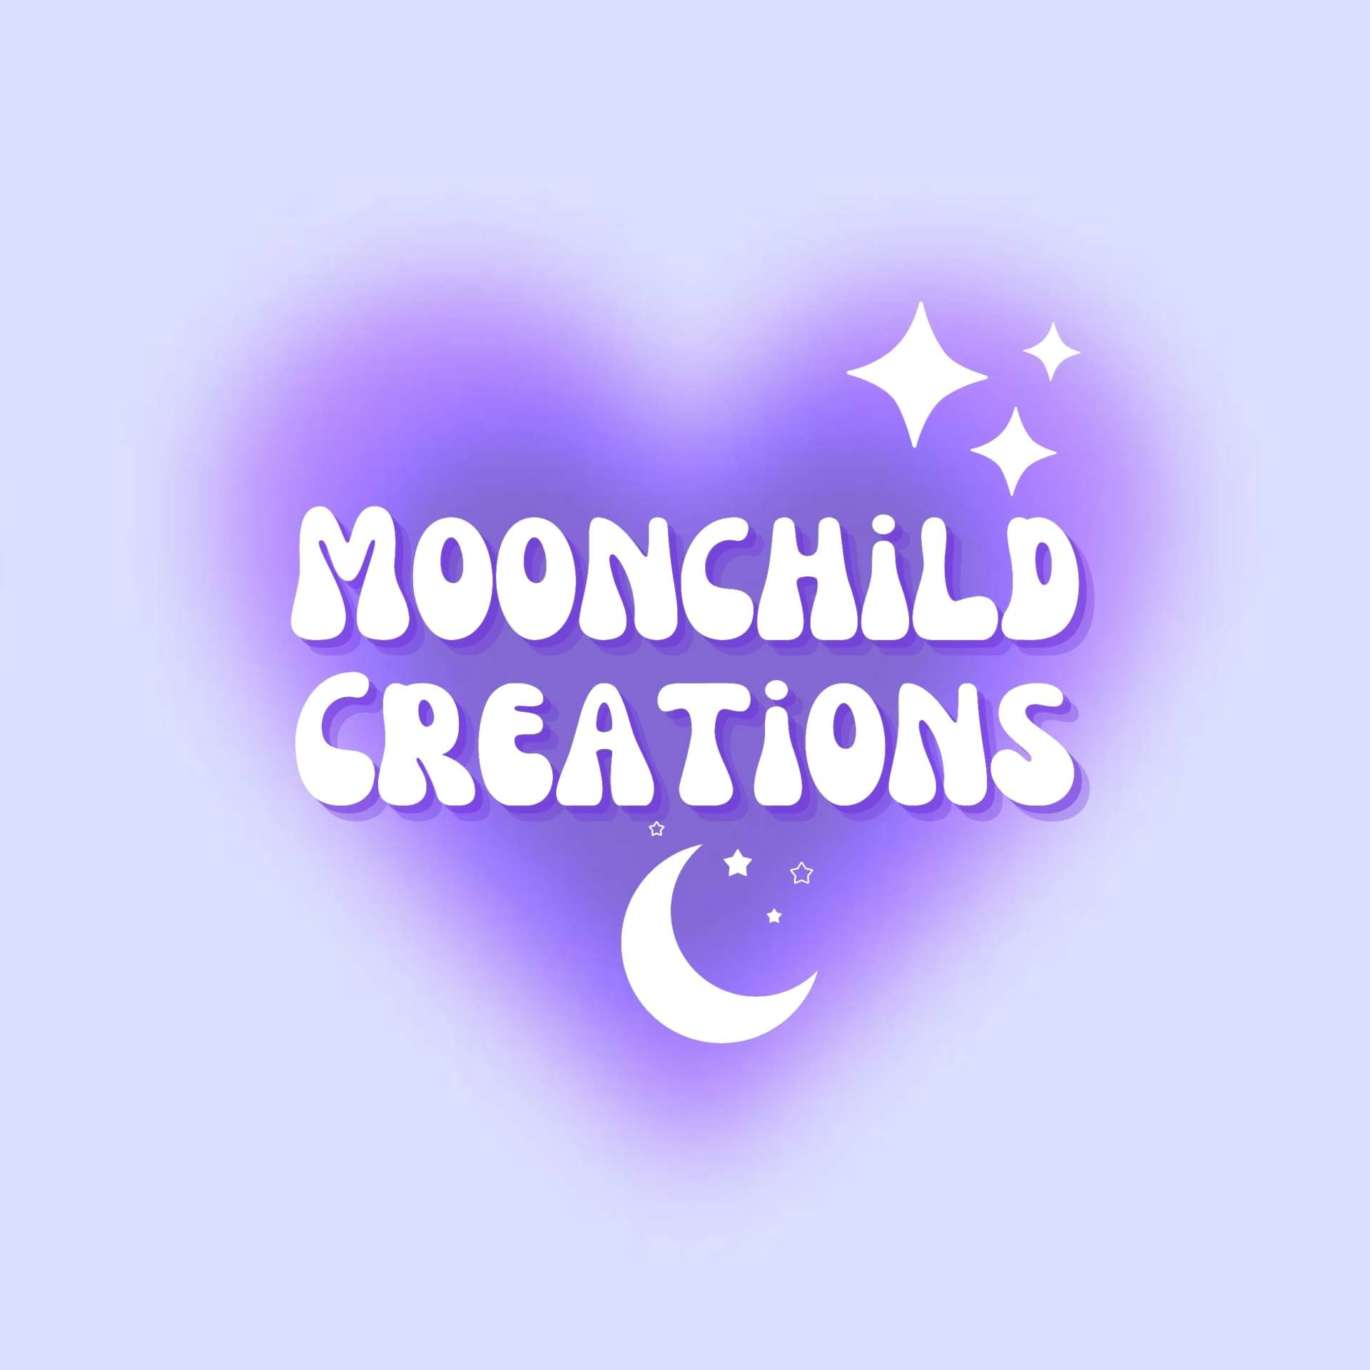 The Moonchild Creations